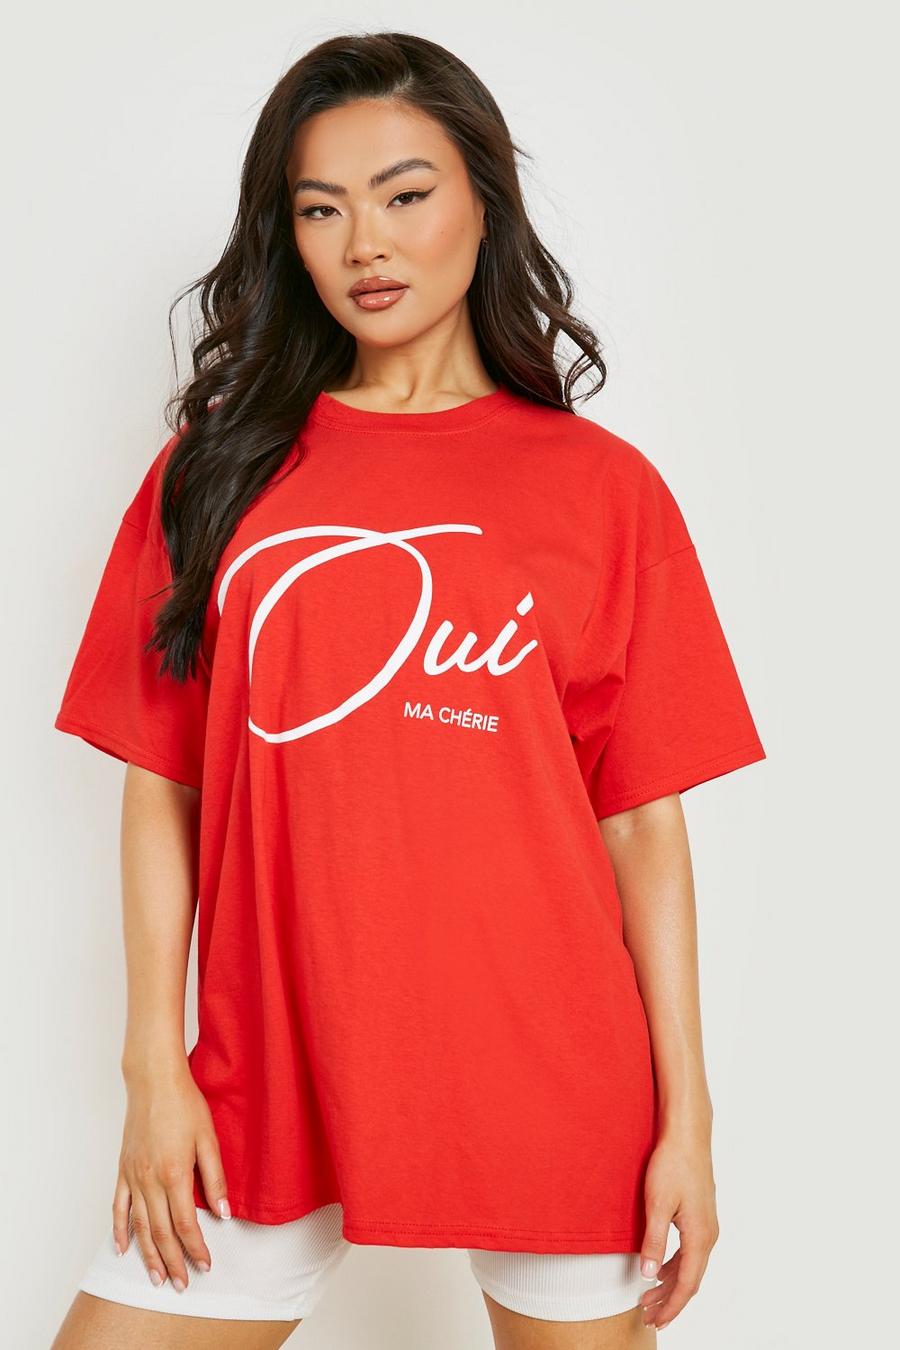 T-Shirt mit Ma Cherie Slogan, Rot red